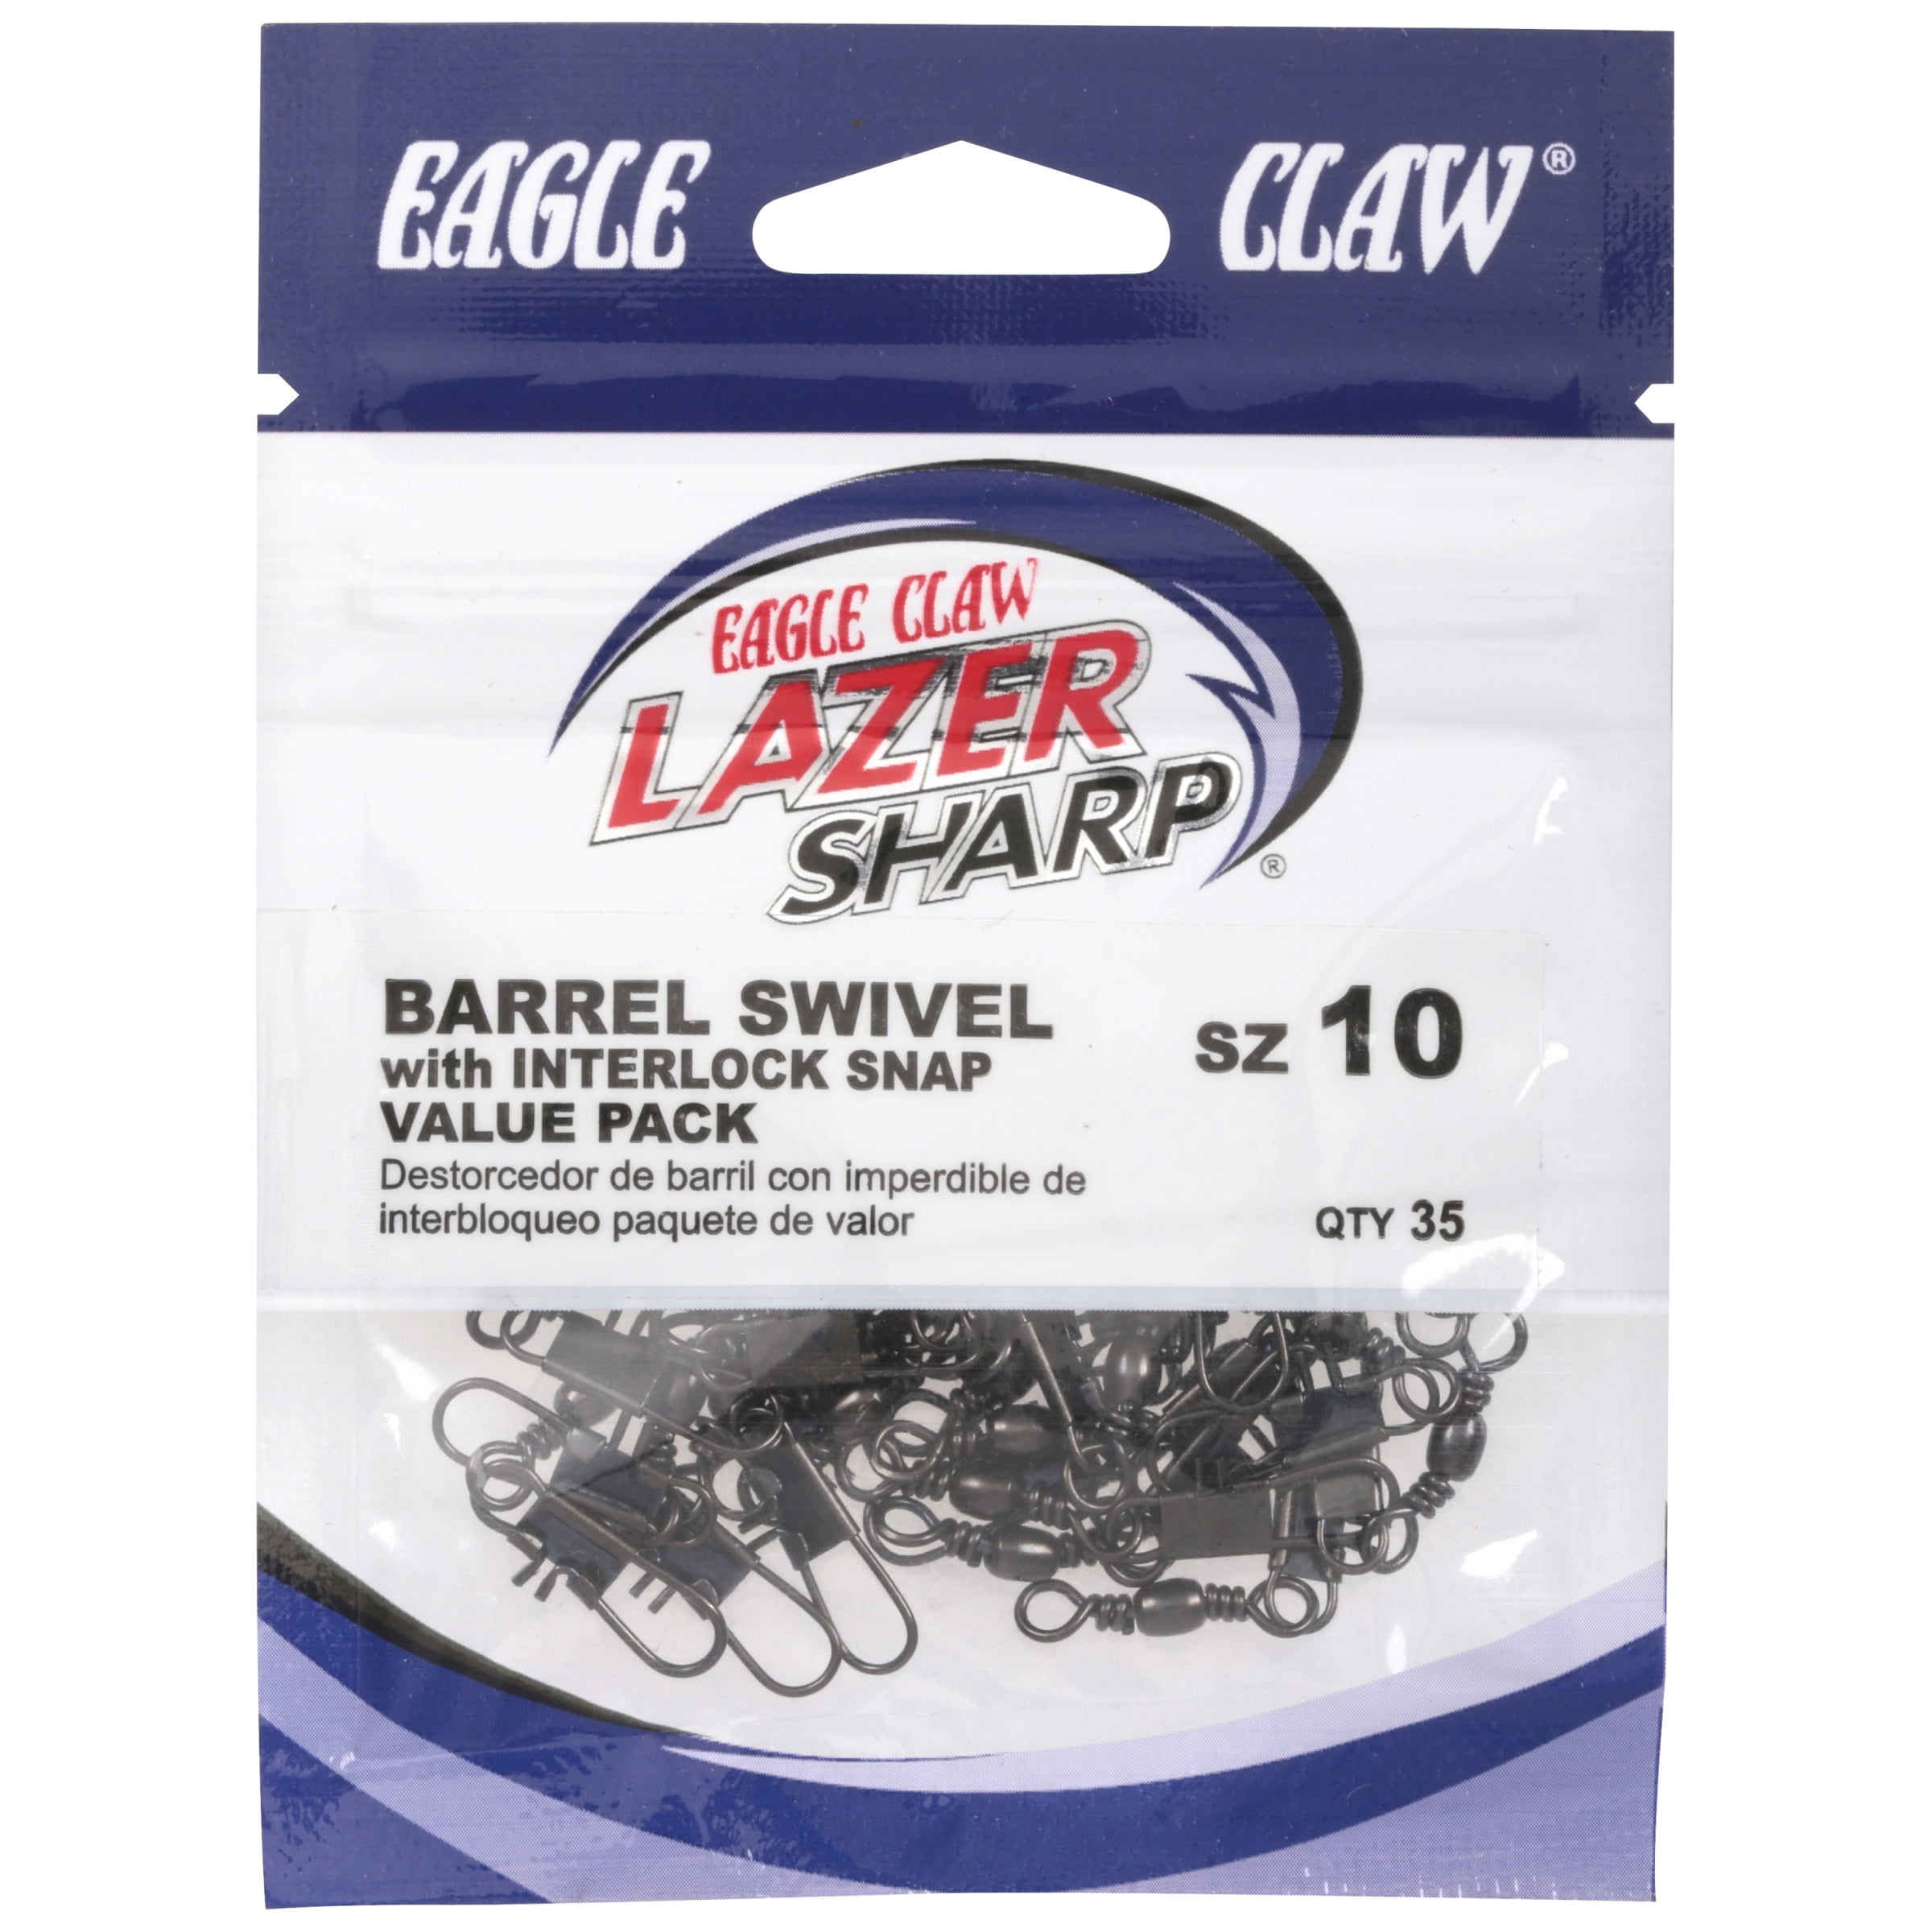 Eagle Claw Lazer Sharp Barrel Swivel Interlock Snap Choose Size 5/7/10/12 Qty 35 